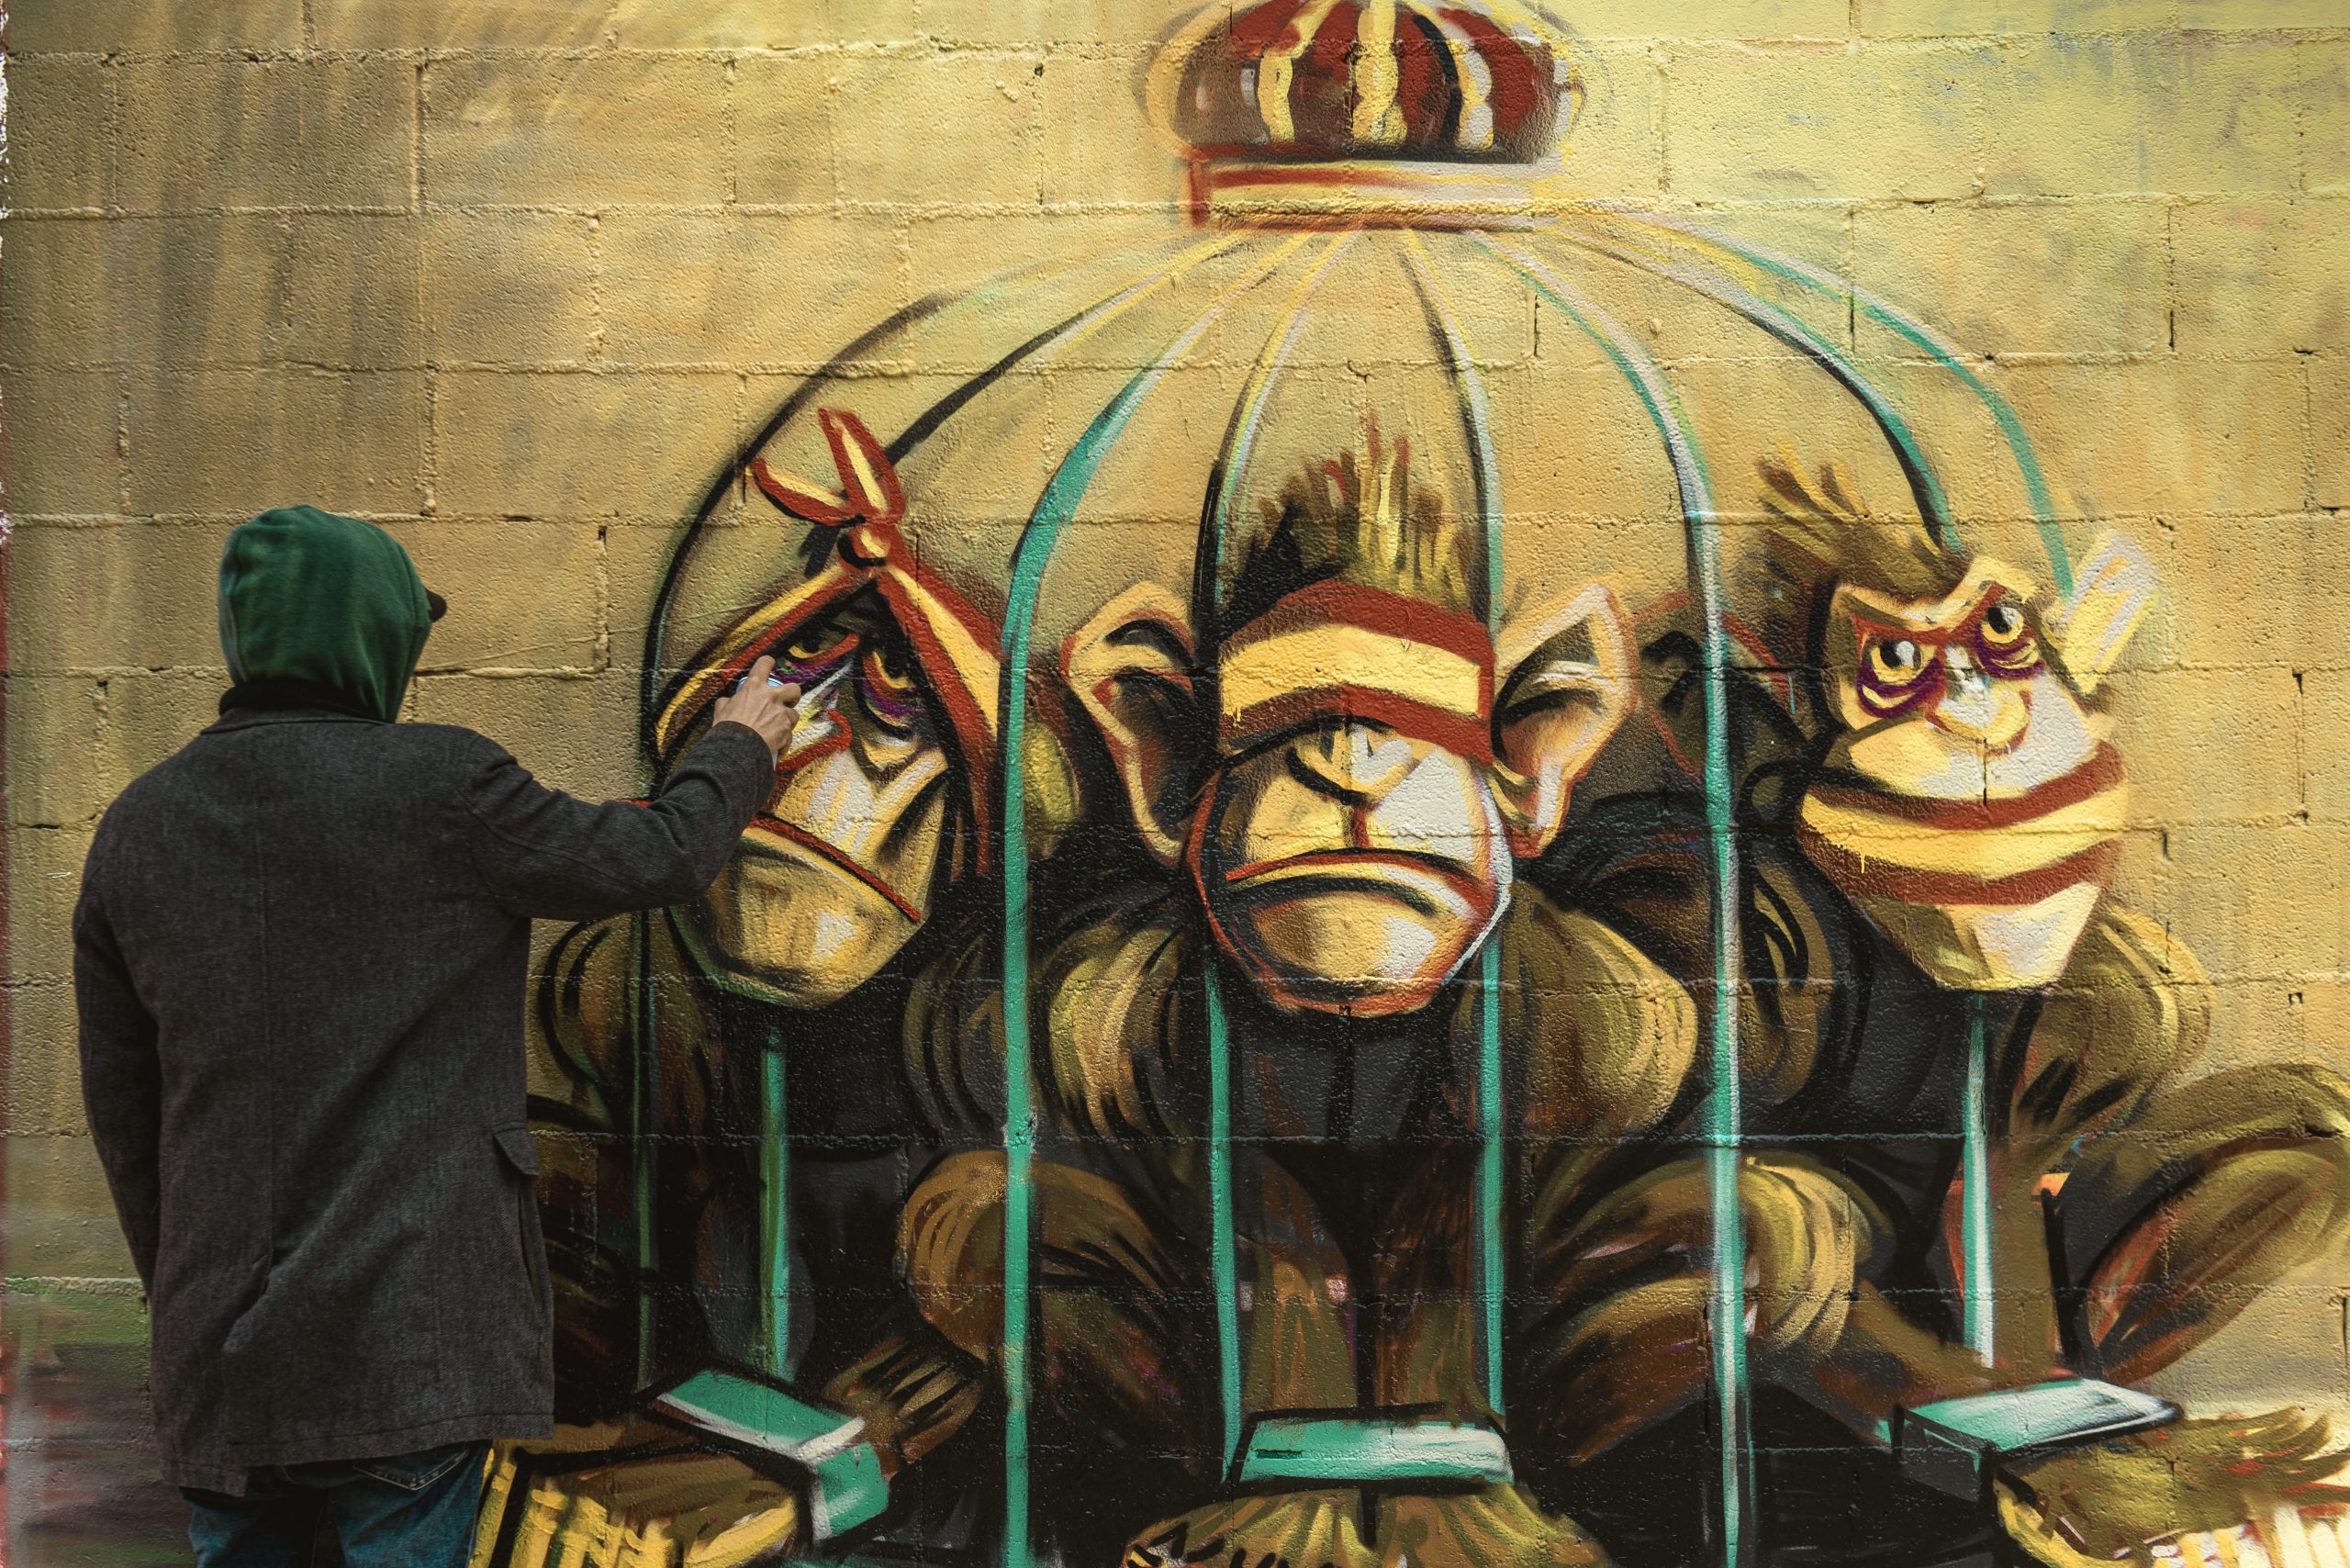 Graffiti criticising the Spanish monarchy 